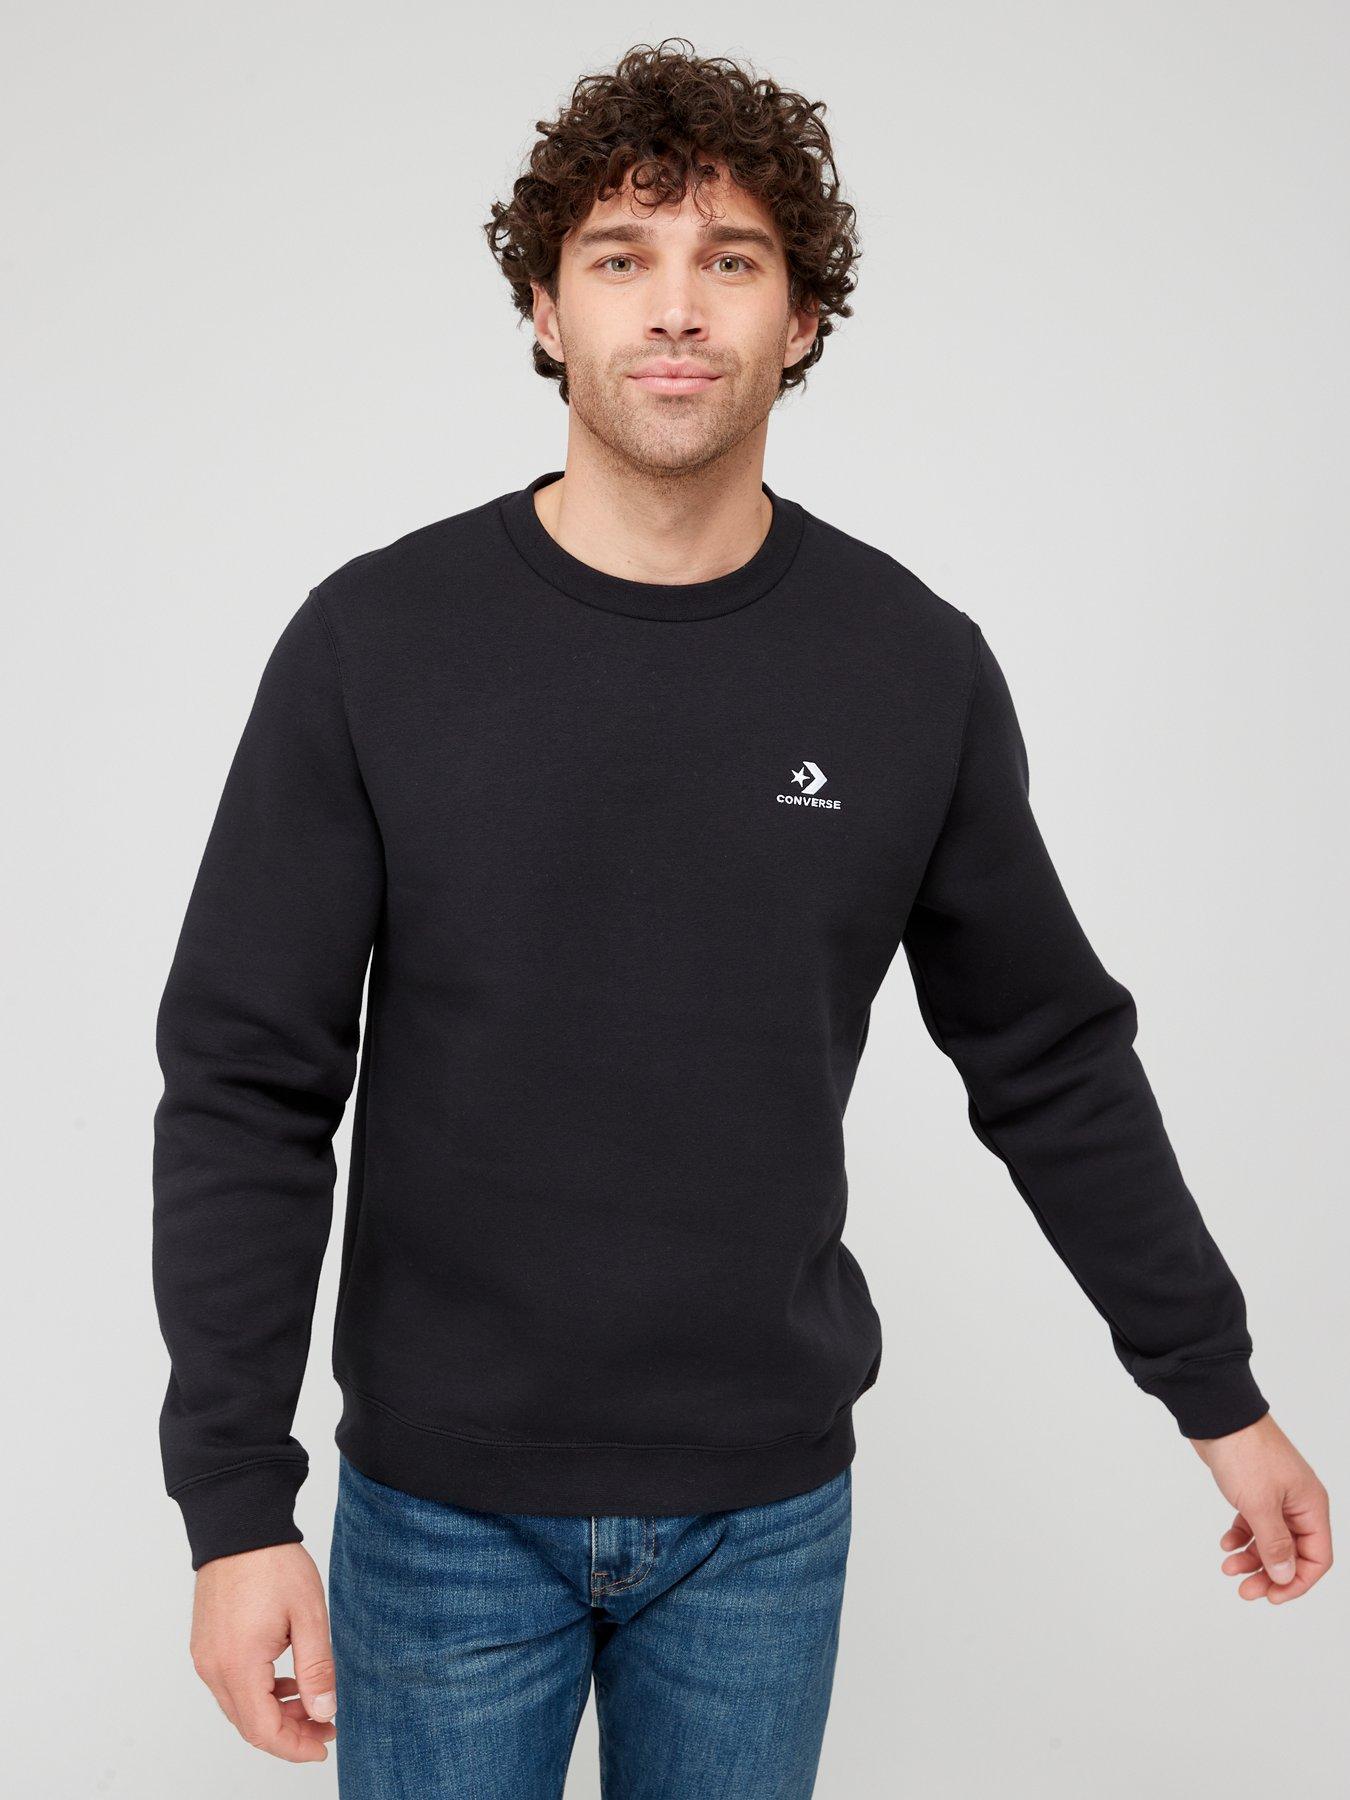 Converse | Hoodies & sweatshirts | Men | Very Ireland | Sweatshirts